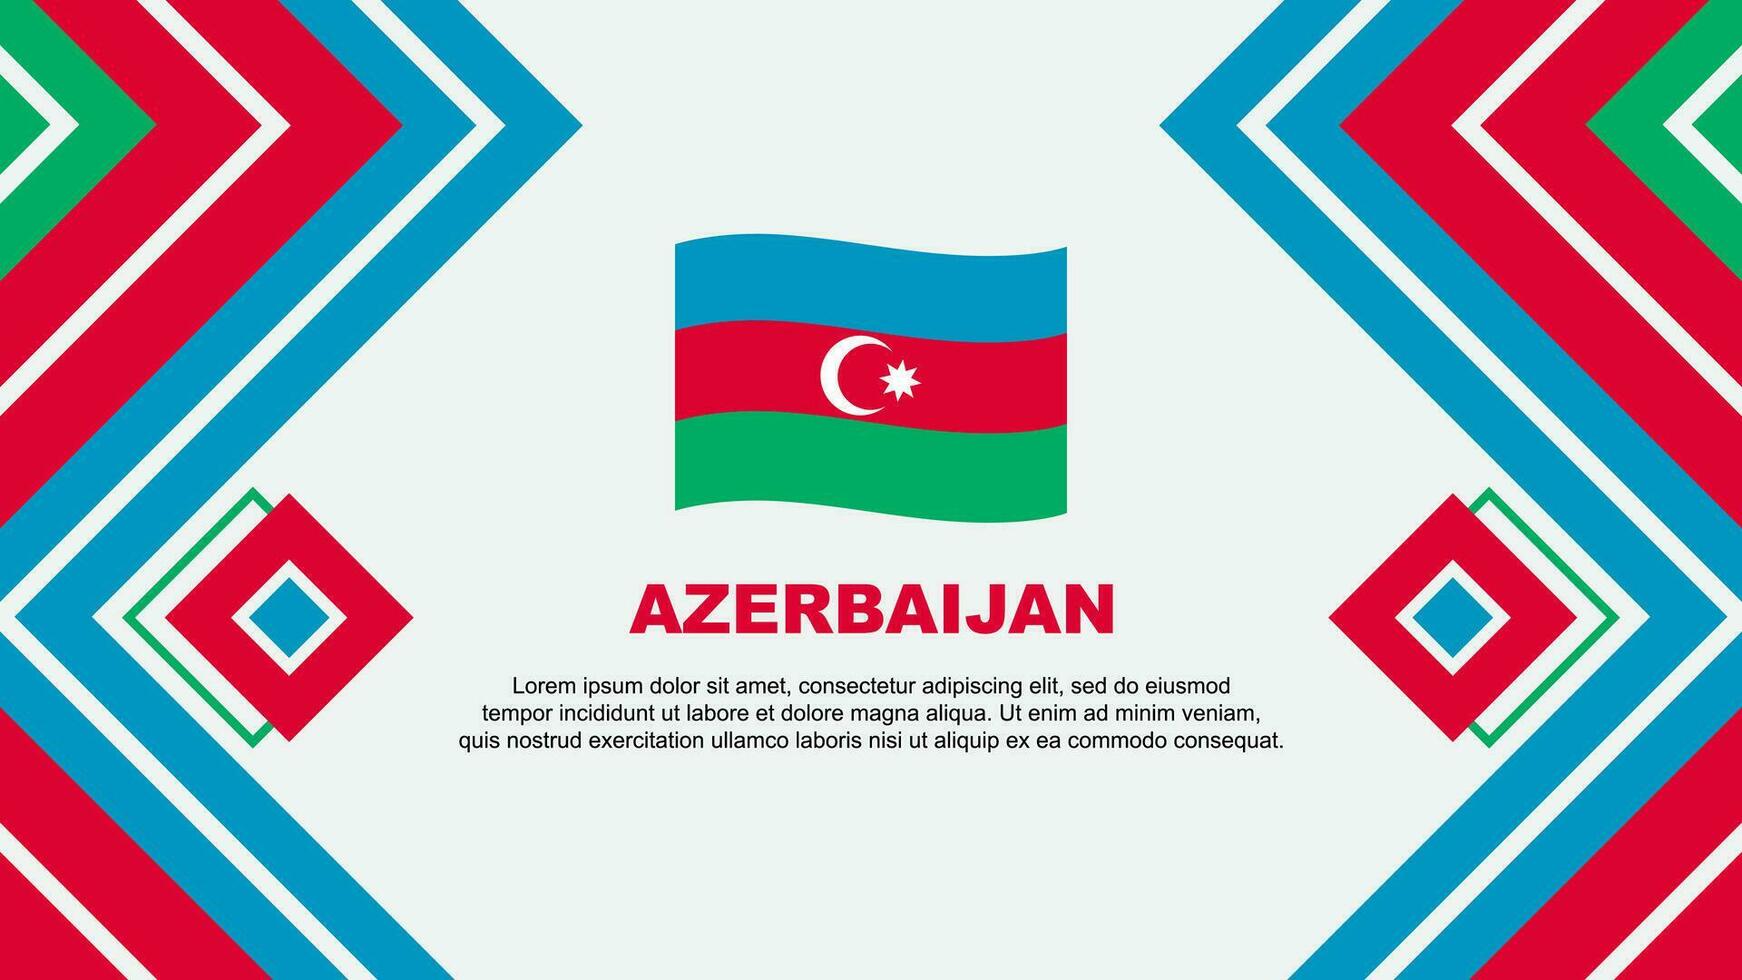 Azerbaijan Flag Abstract Background Design Template. Azerbaijan Independence Day Banner Wallpaper Vector Illustration. Azerbaijan Design